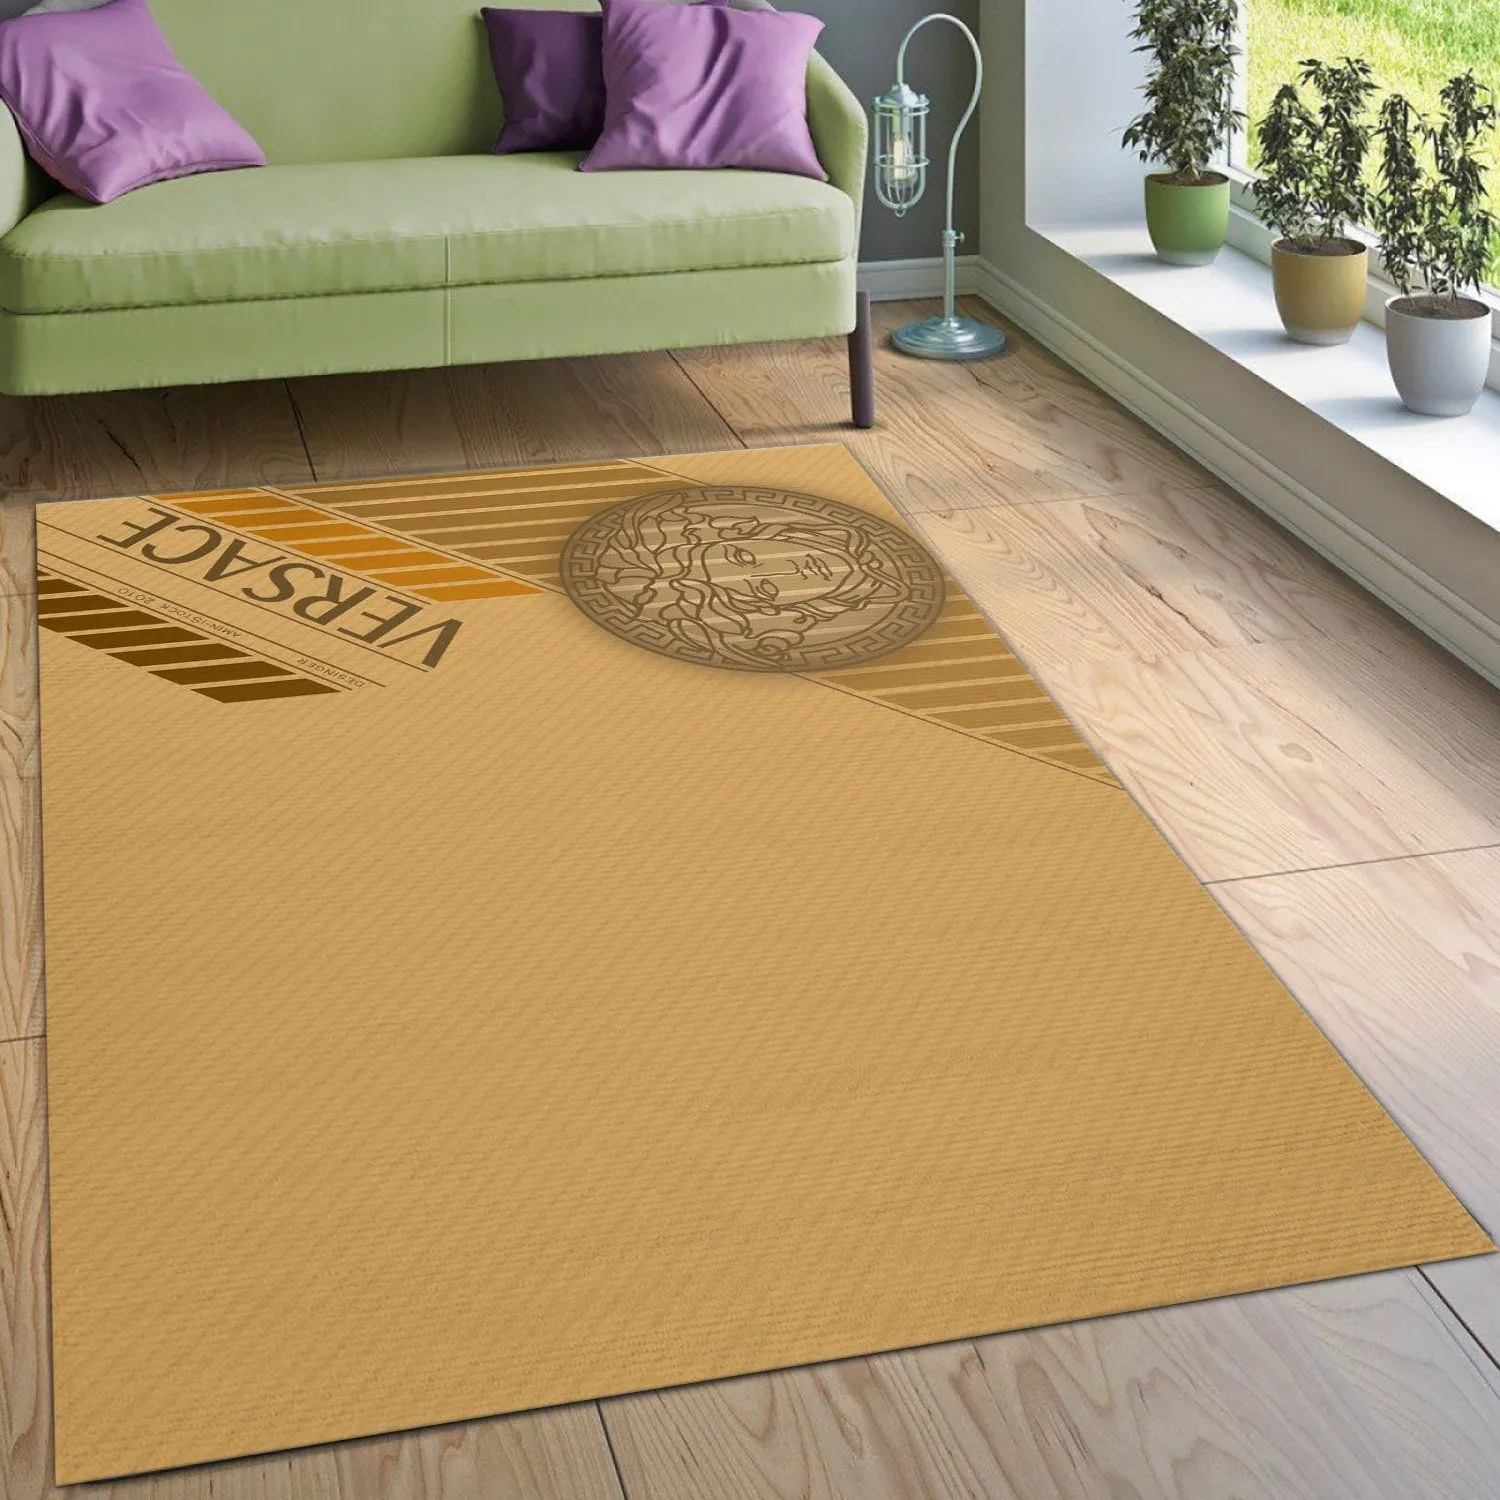 Versace v Rectangle Rug Home Decor Area Carpet Fashion Brand Luxury Door Mat